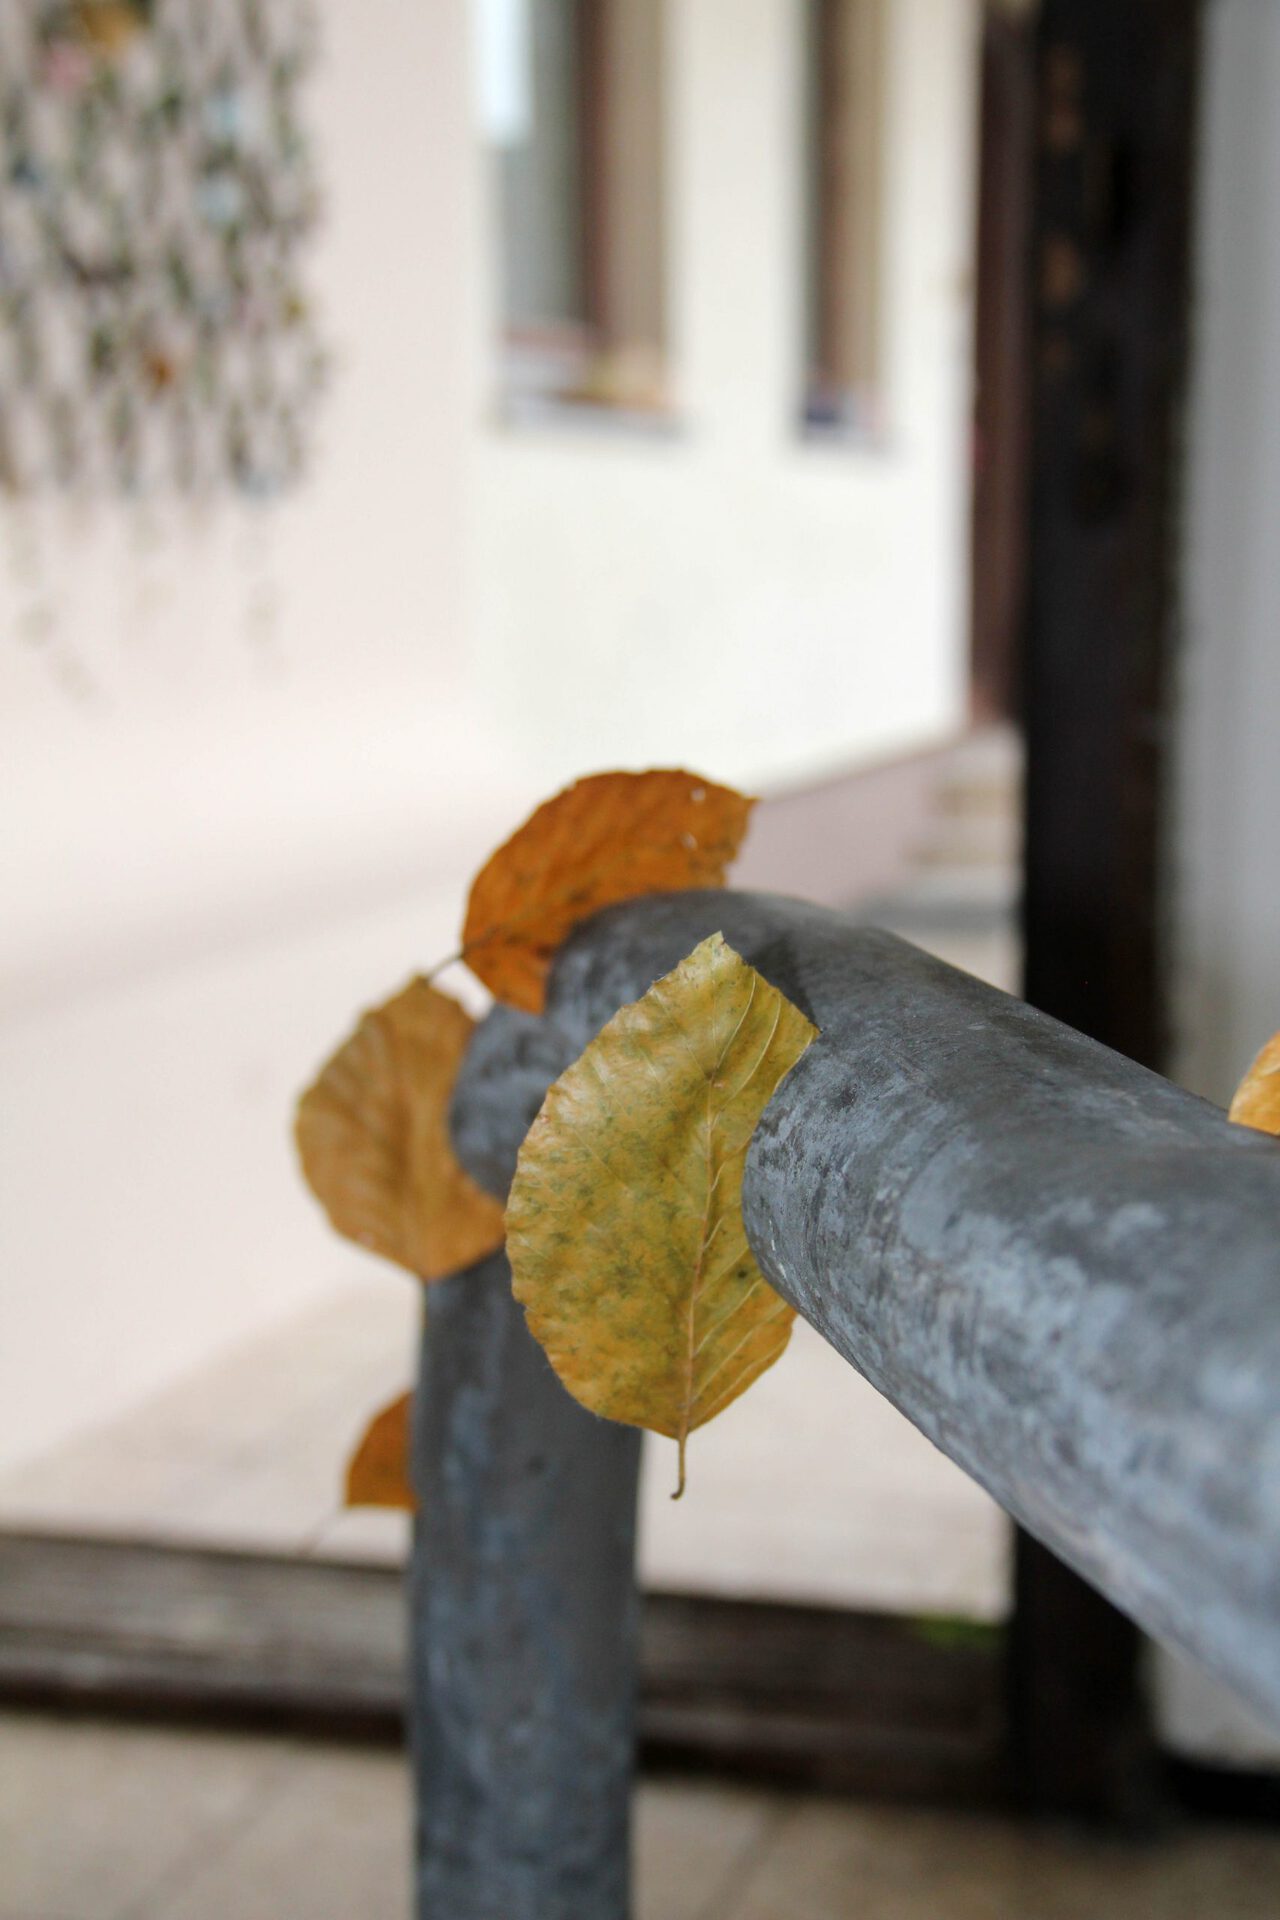 Untitled (detail), 2021, metal bar, sharp leaves